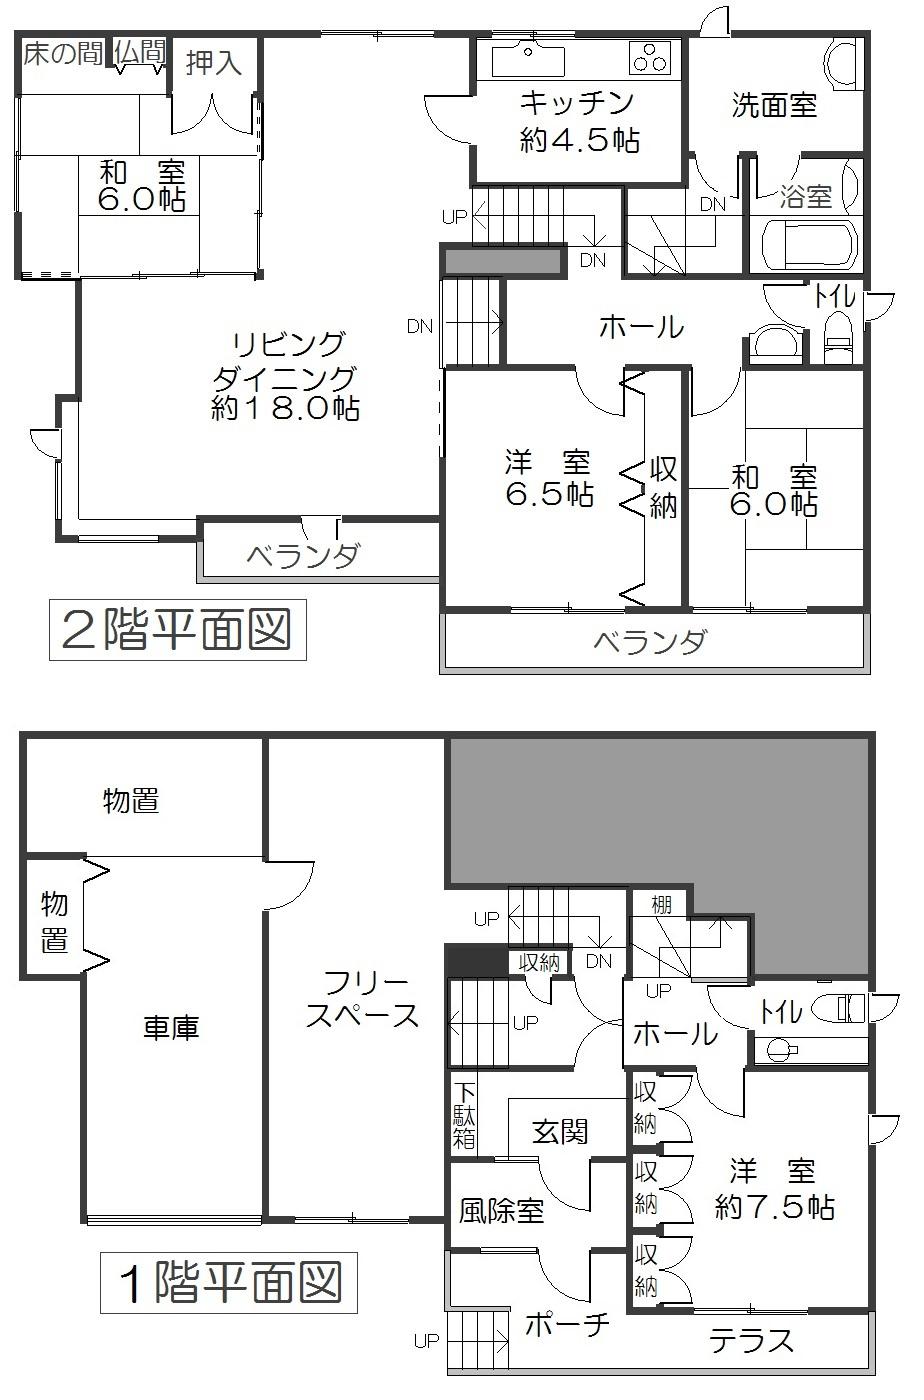 Floor plan. 21.9 million yen, 4LDK, Land area 216.58 sq m , Building area 178.45 sq m Floor